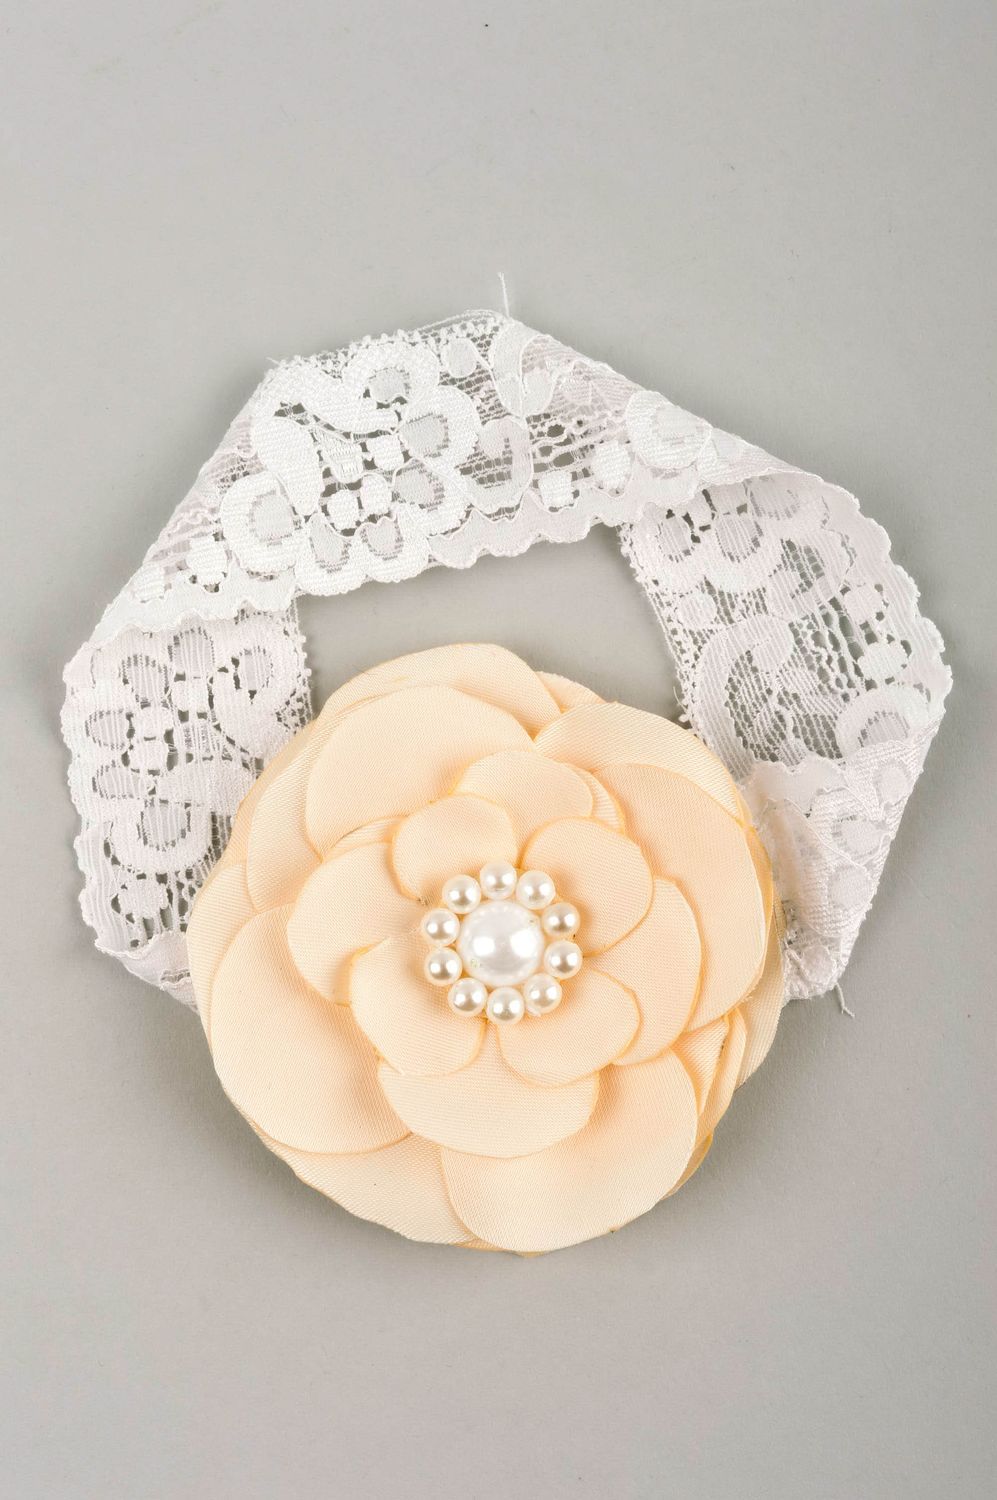 Gentle handmade flower headband stylish headband for kids hair accessories ideas photo 4